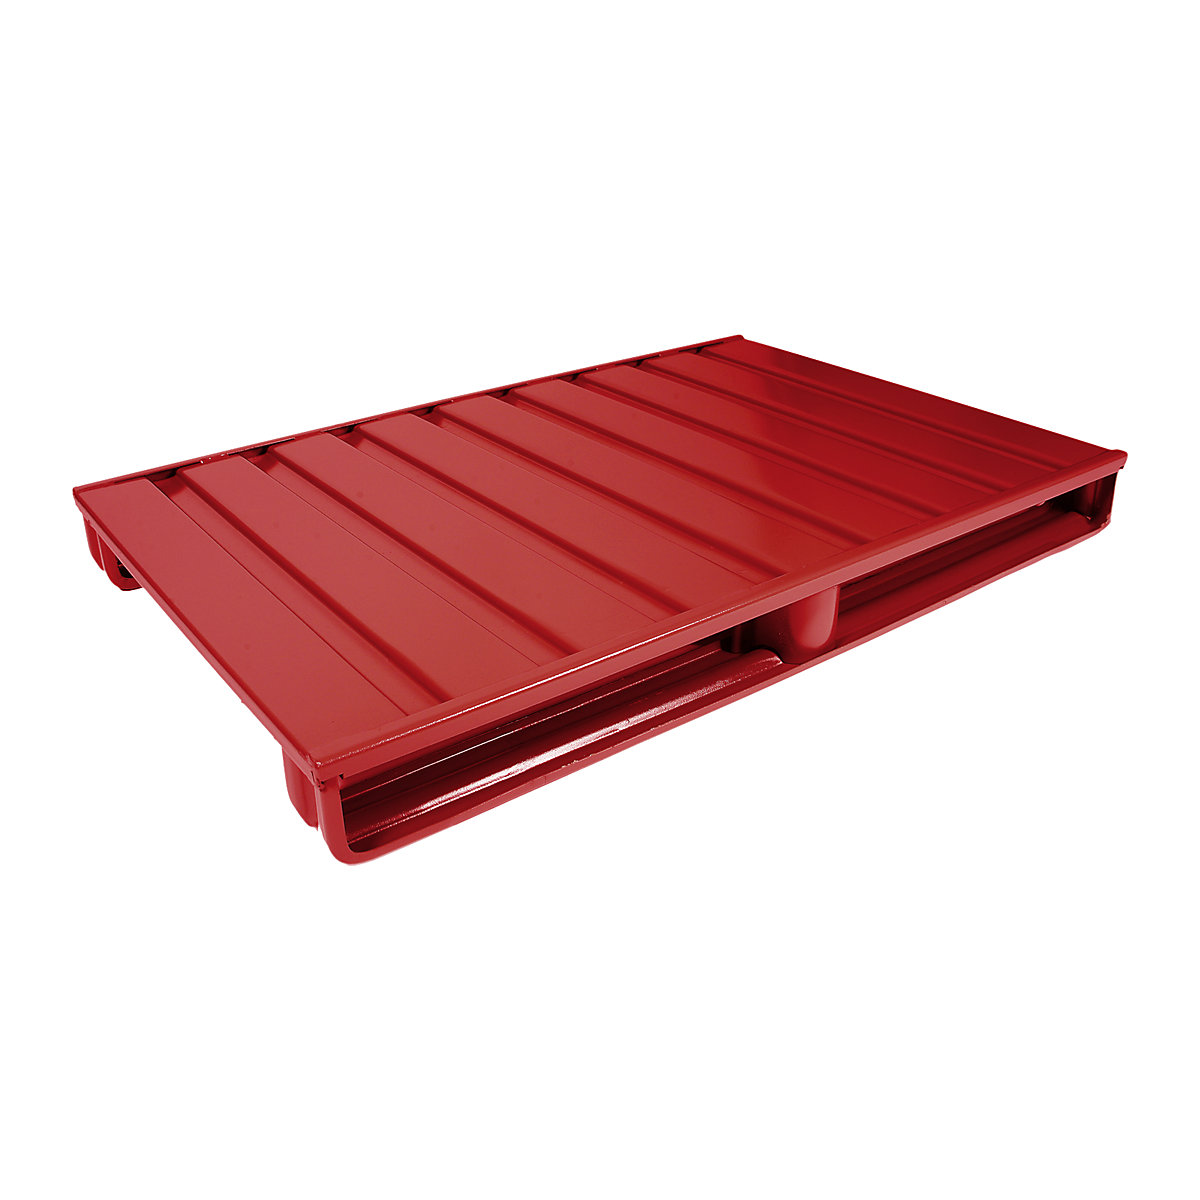 Ploska jeklena paleta – Heson, DxŠ 1200 x 800 mm, nosilnost 2000 kg, ognjeno rdeče barve, od 10 kosov-4